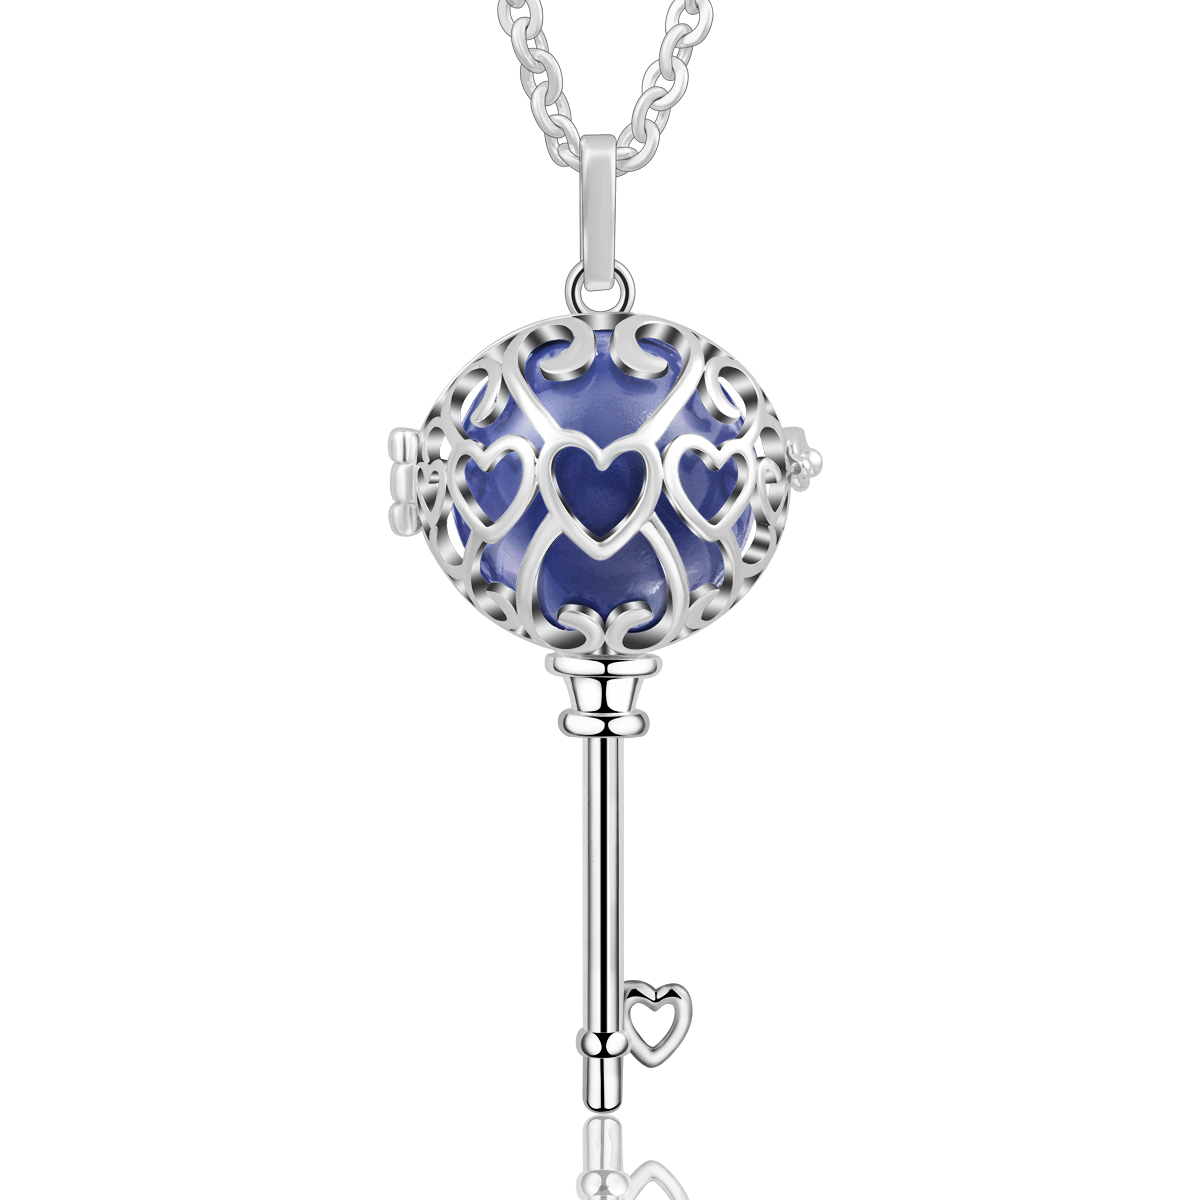 Merryshine Jewelry Fashion jewelry 925 sterling silver brass thin chain heart key necklace for men women